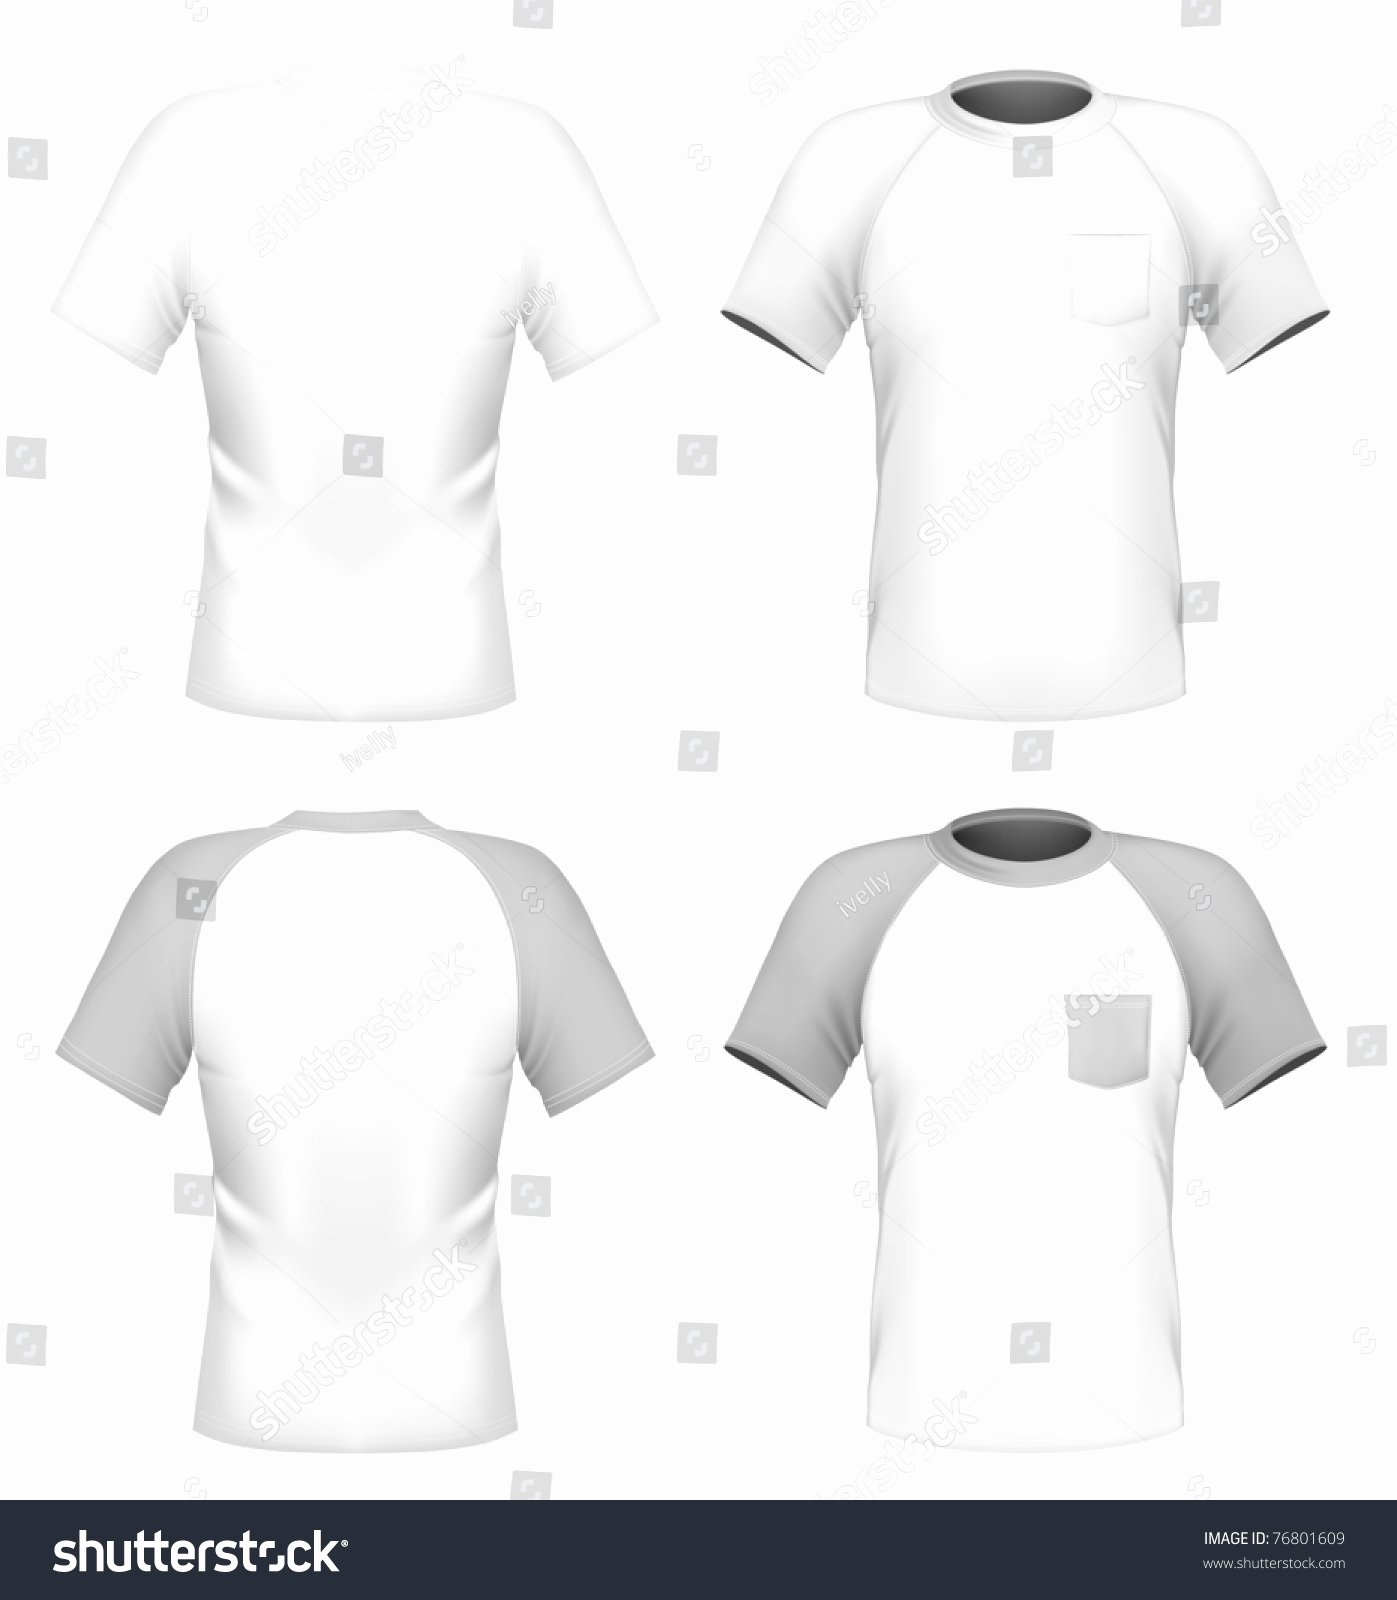 Pocket Shirt Template Fresh Vector Men S T Shirt Design Template with Pocket Front